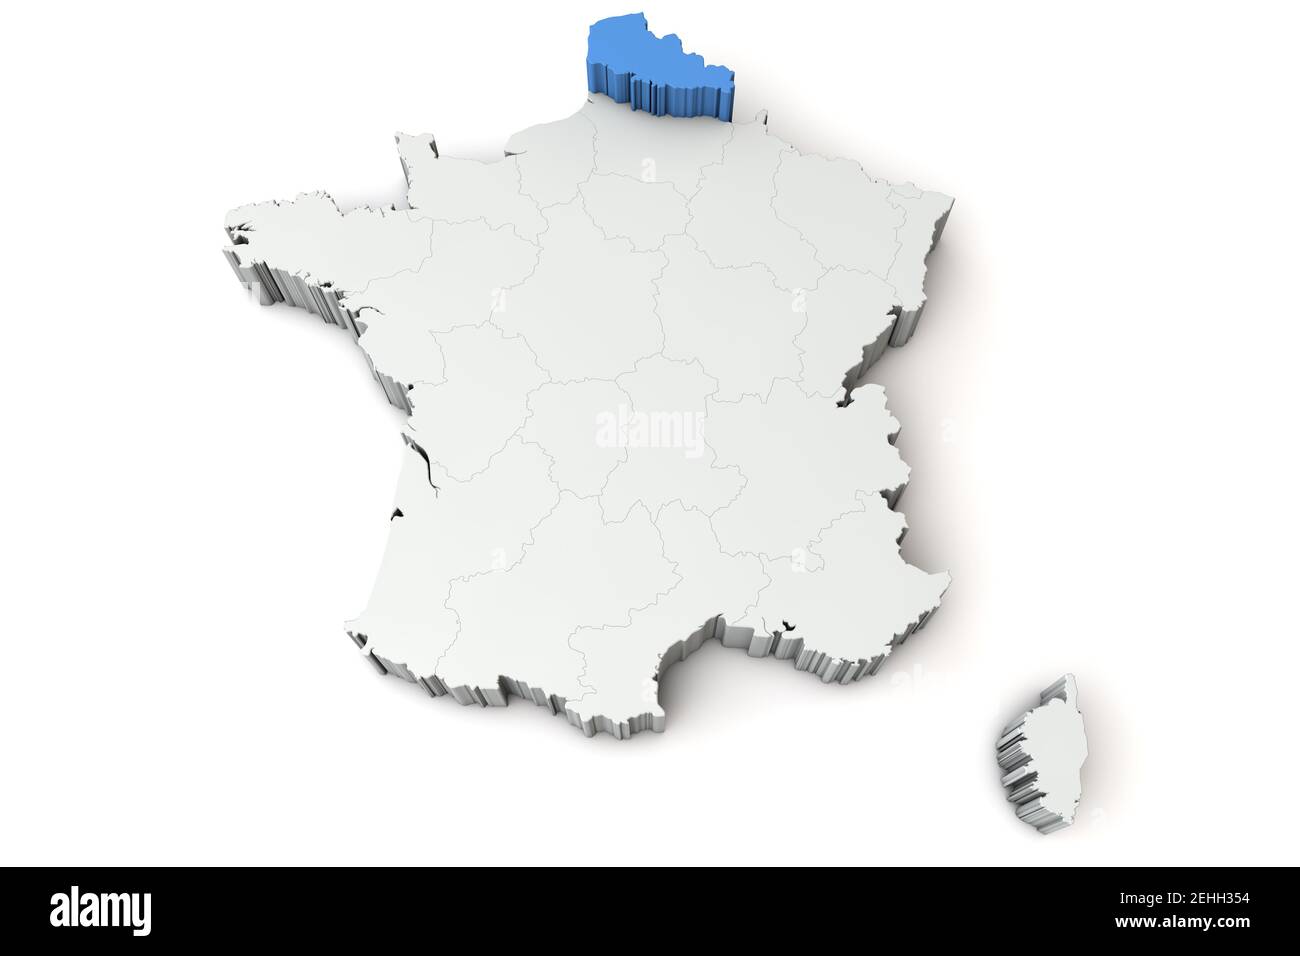 Map of France showing nord pas de calais region. 3D Rendering Stock Photo